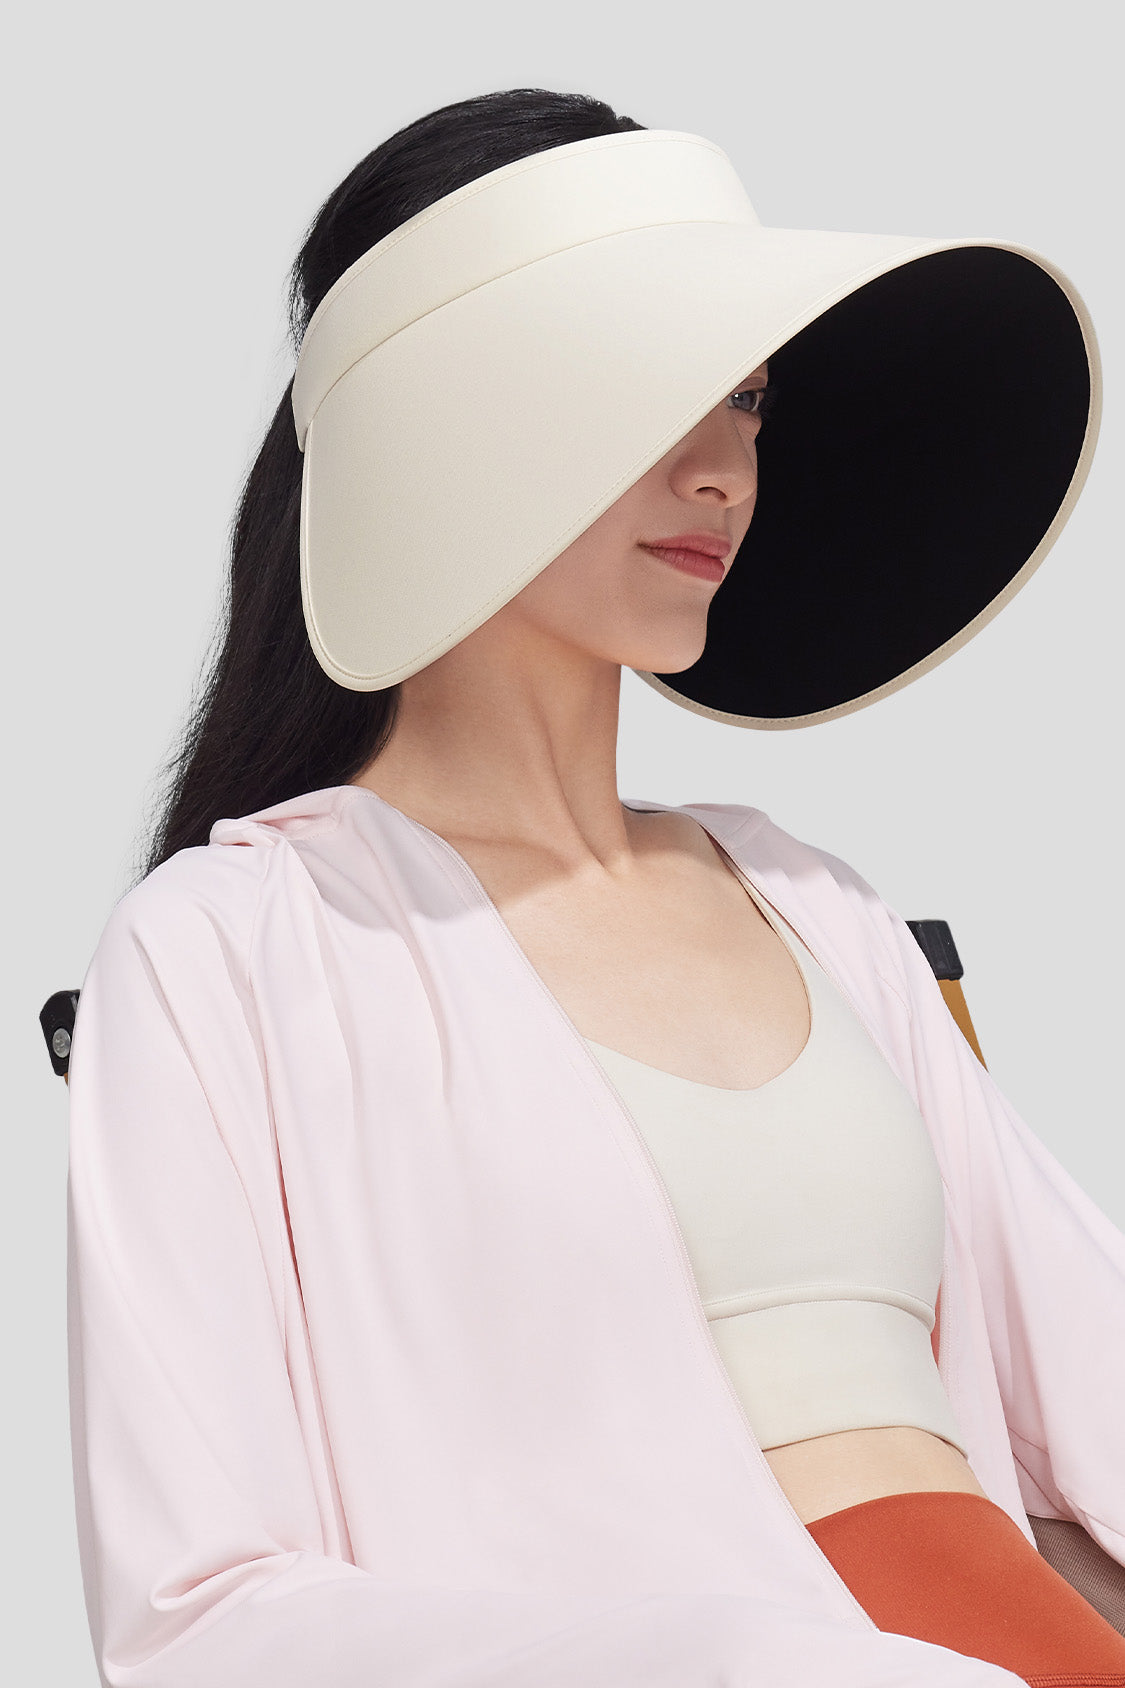 Breeze - Women's Ultra Wide Brim Sun Visor Hat UPF50+ Light Beige / One Size - Adjustable